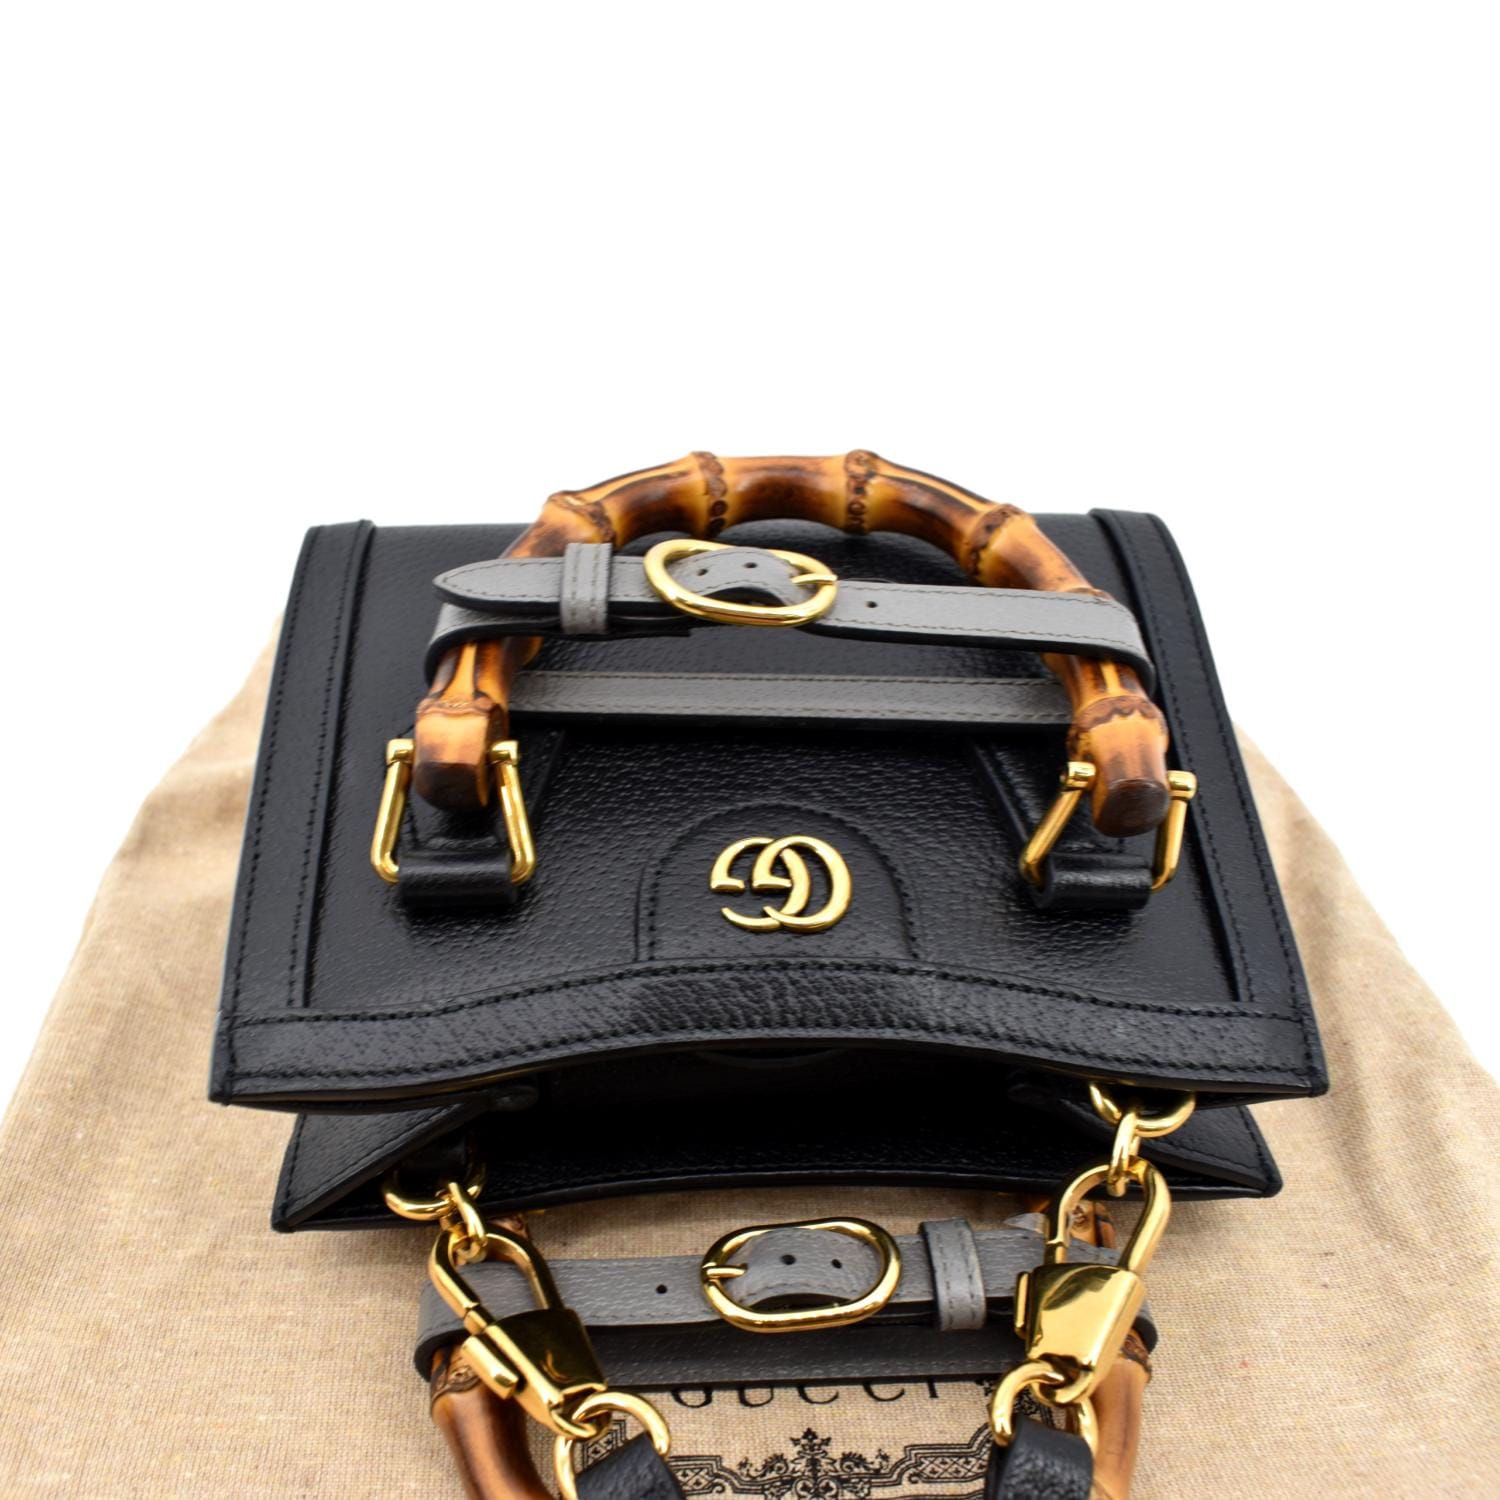 Gucci Diana Bamboo Mini Leather Tote Bag